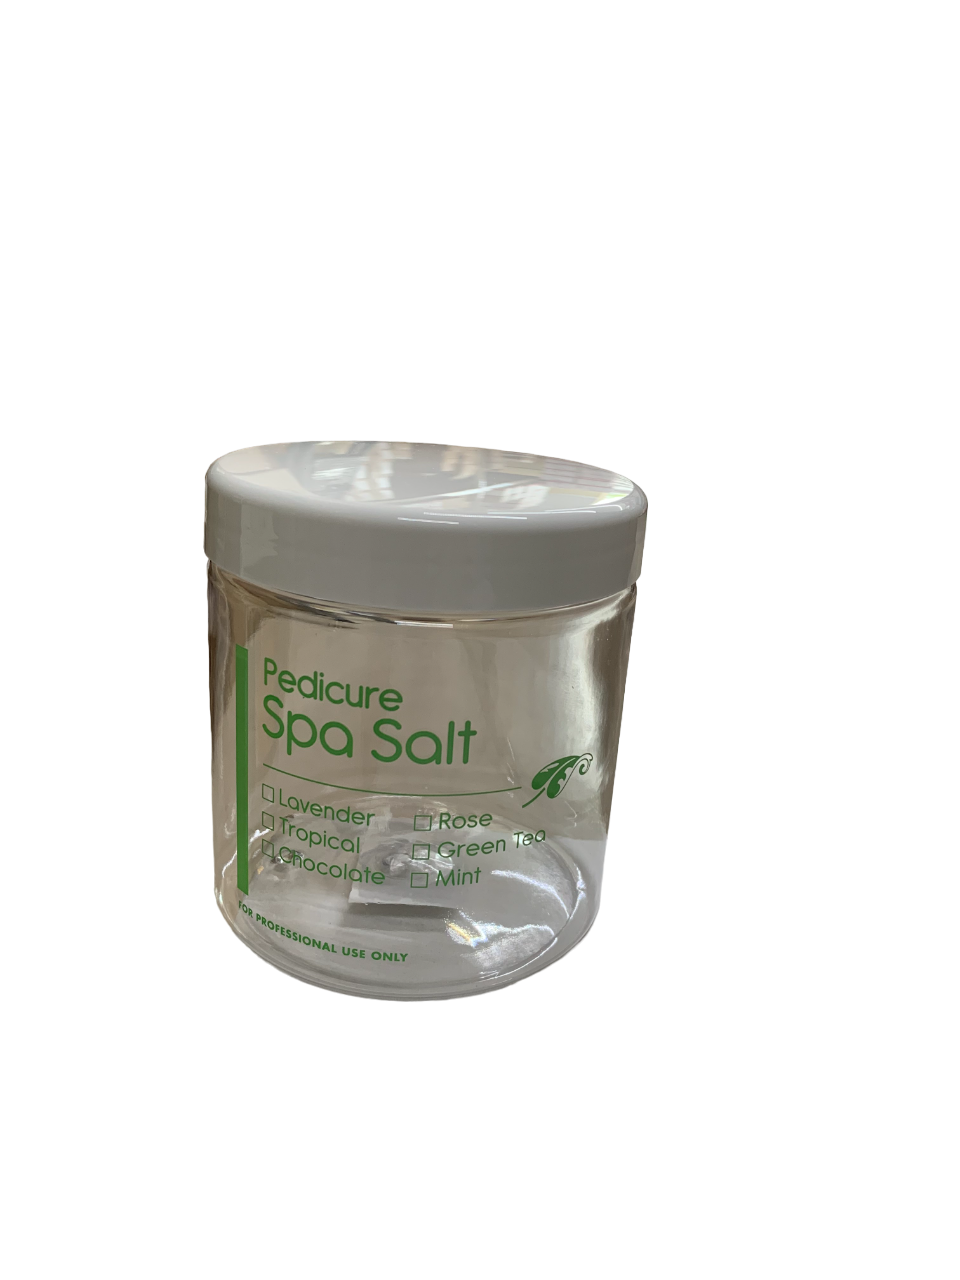 Empty Jar Pedicure Spa Salt 16oz